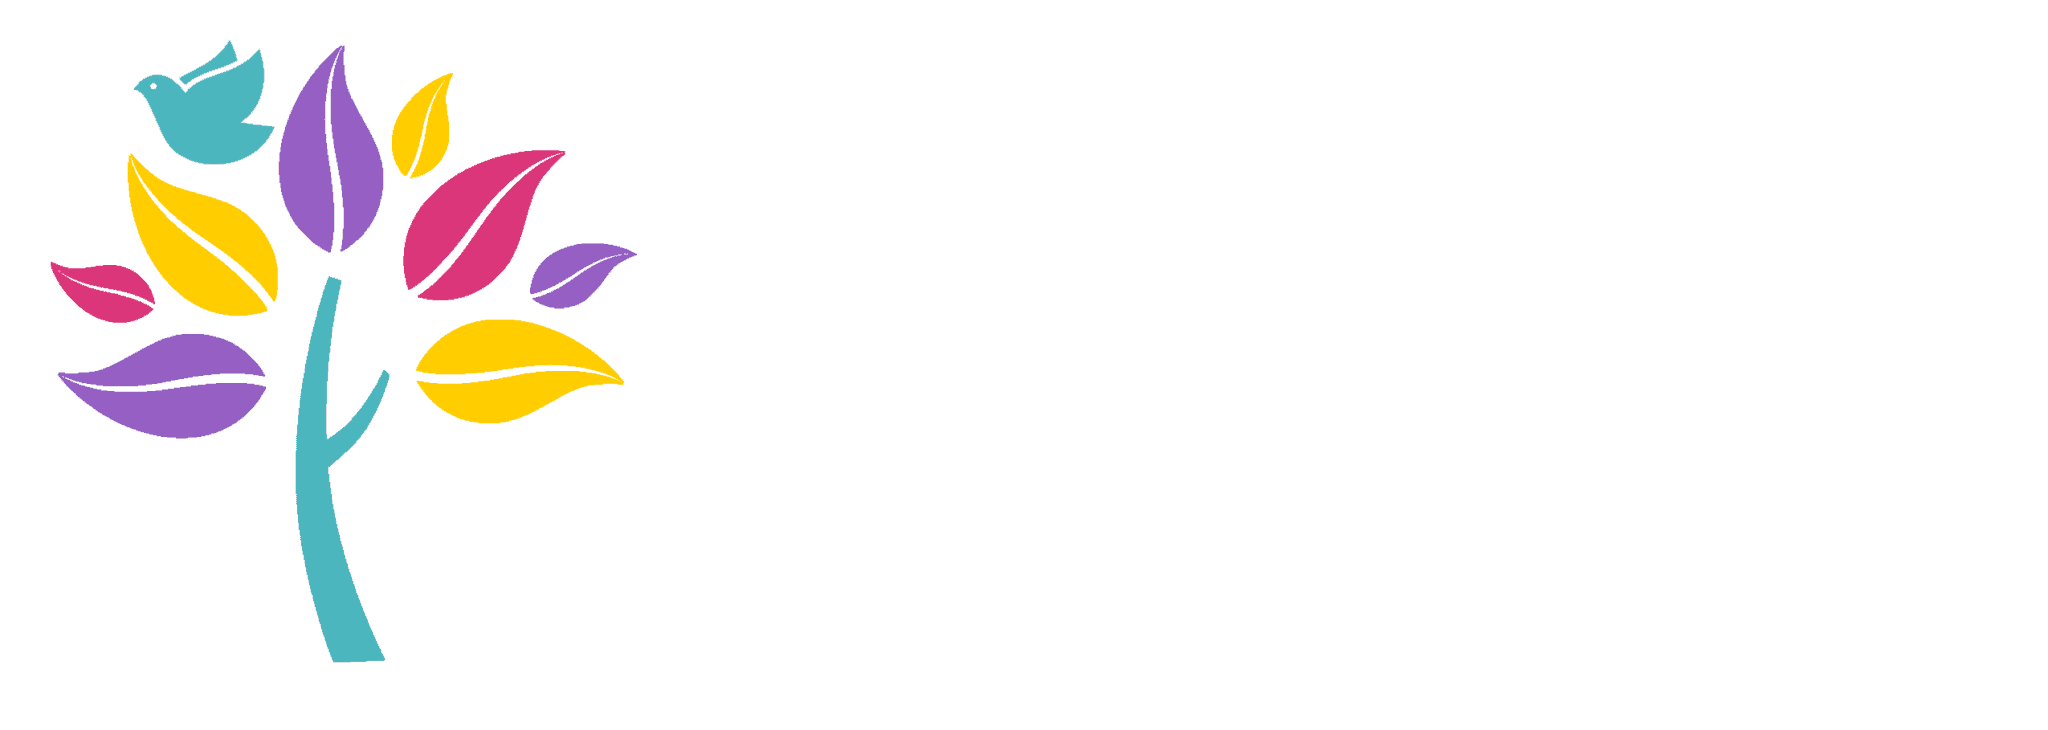 Better Way Events Logo